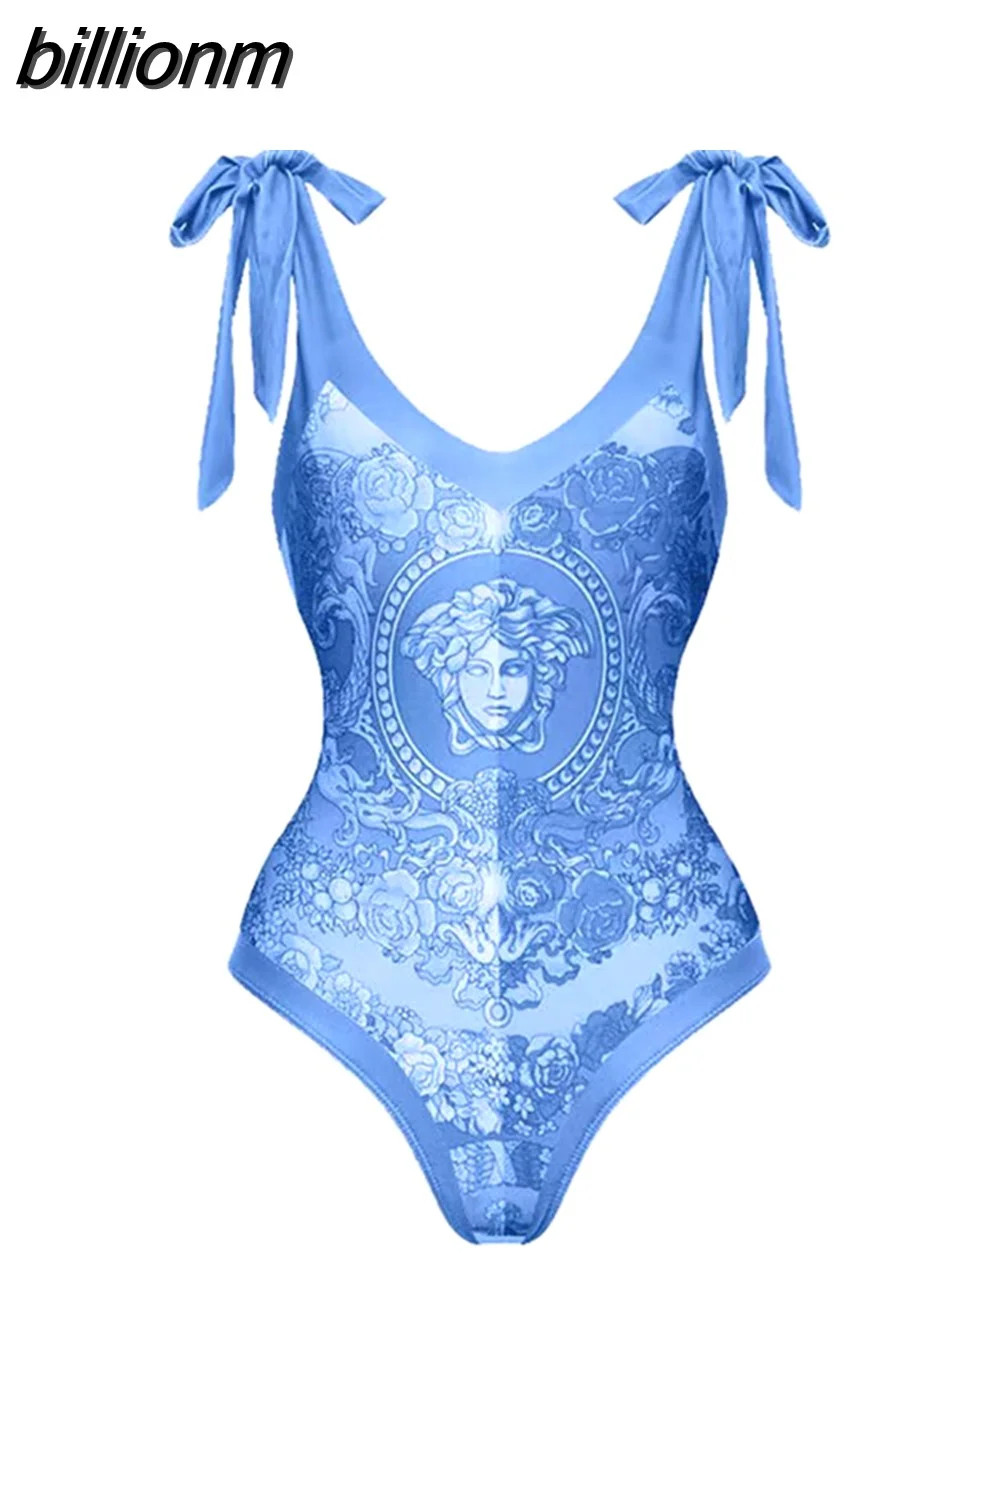 billionm New Vintage Swimsuit Women V-Neck Swimwear Brazilian Holiday Designer Bathing Suit Fashion Beach Cover Up Summer